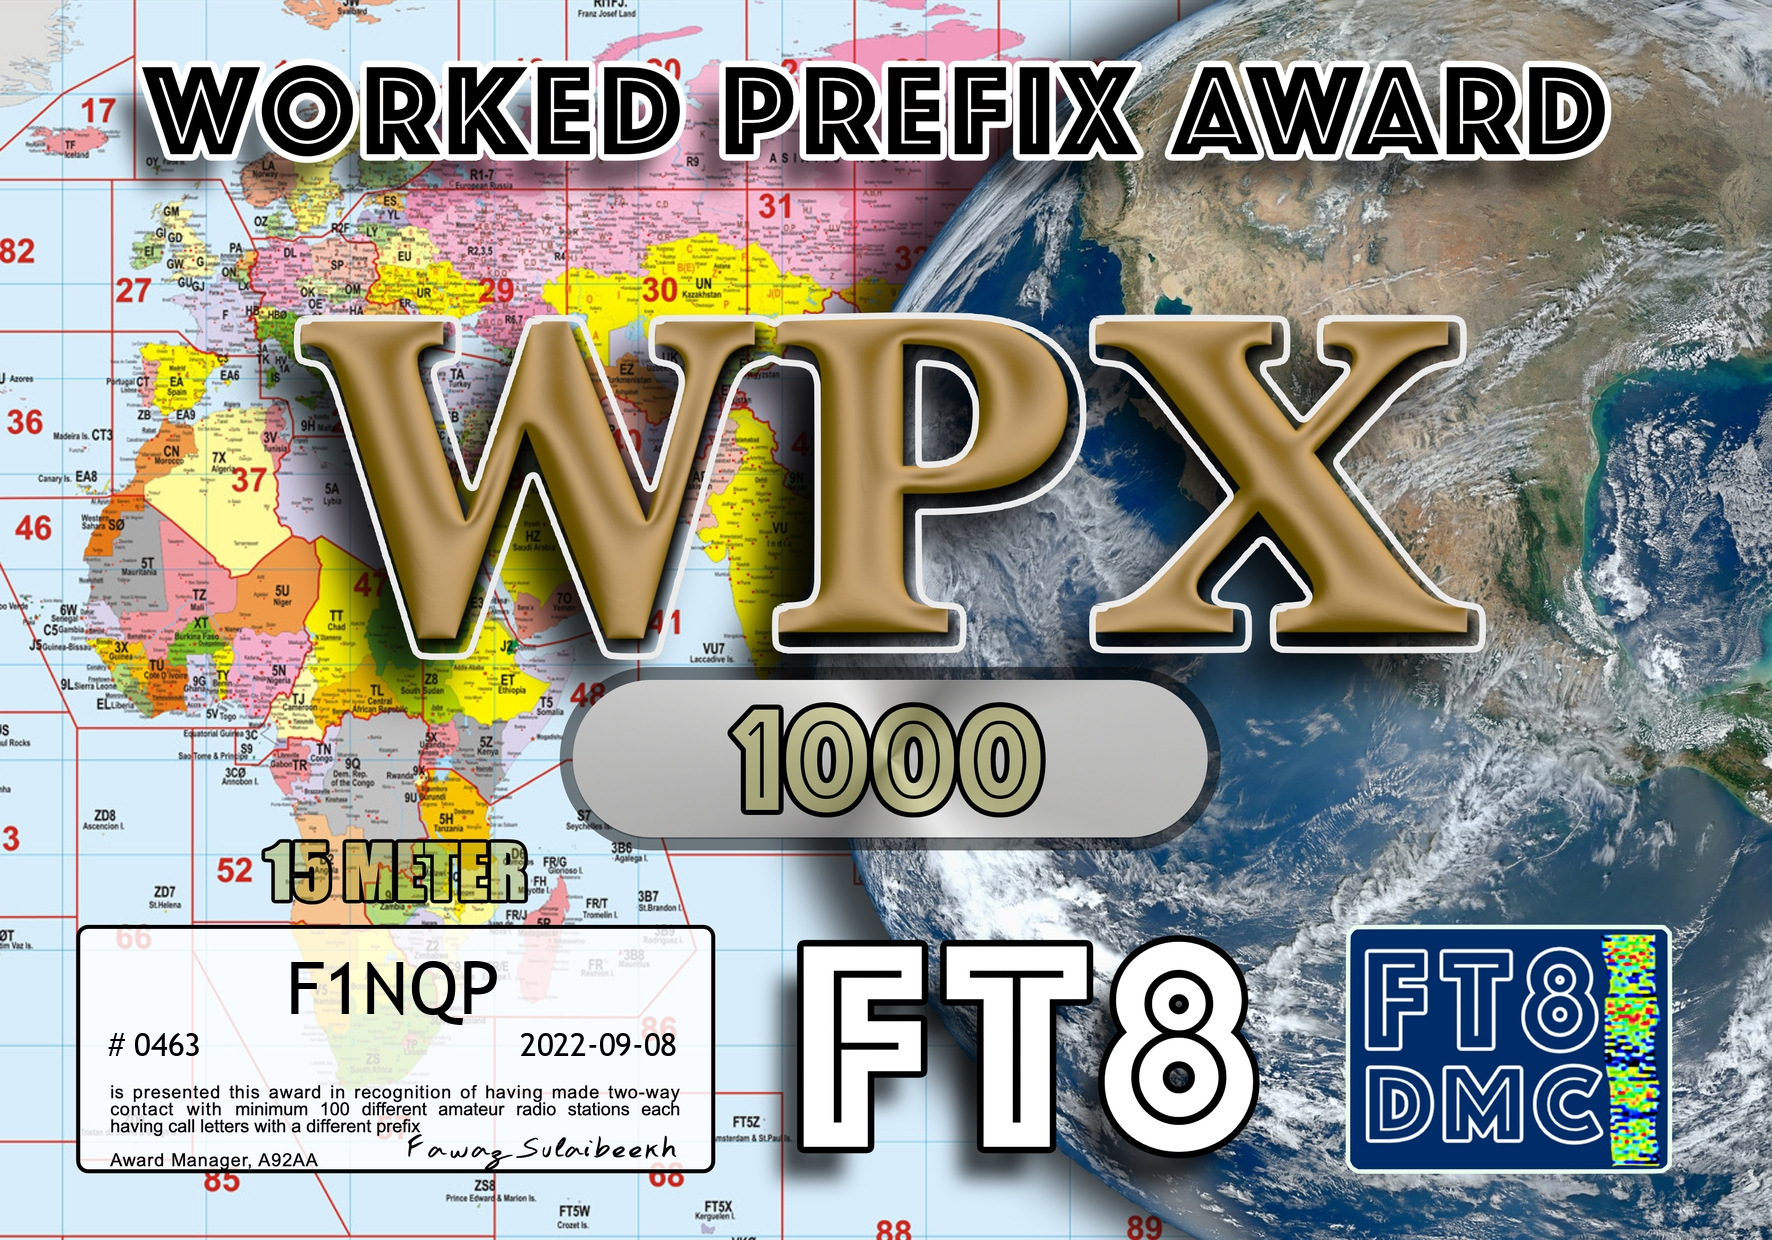 F1NQP-WPX15-1000_FT8DMC.jpg